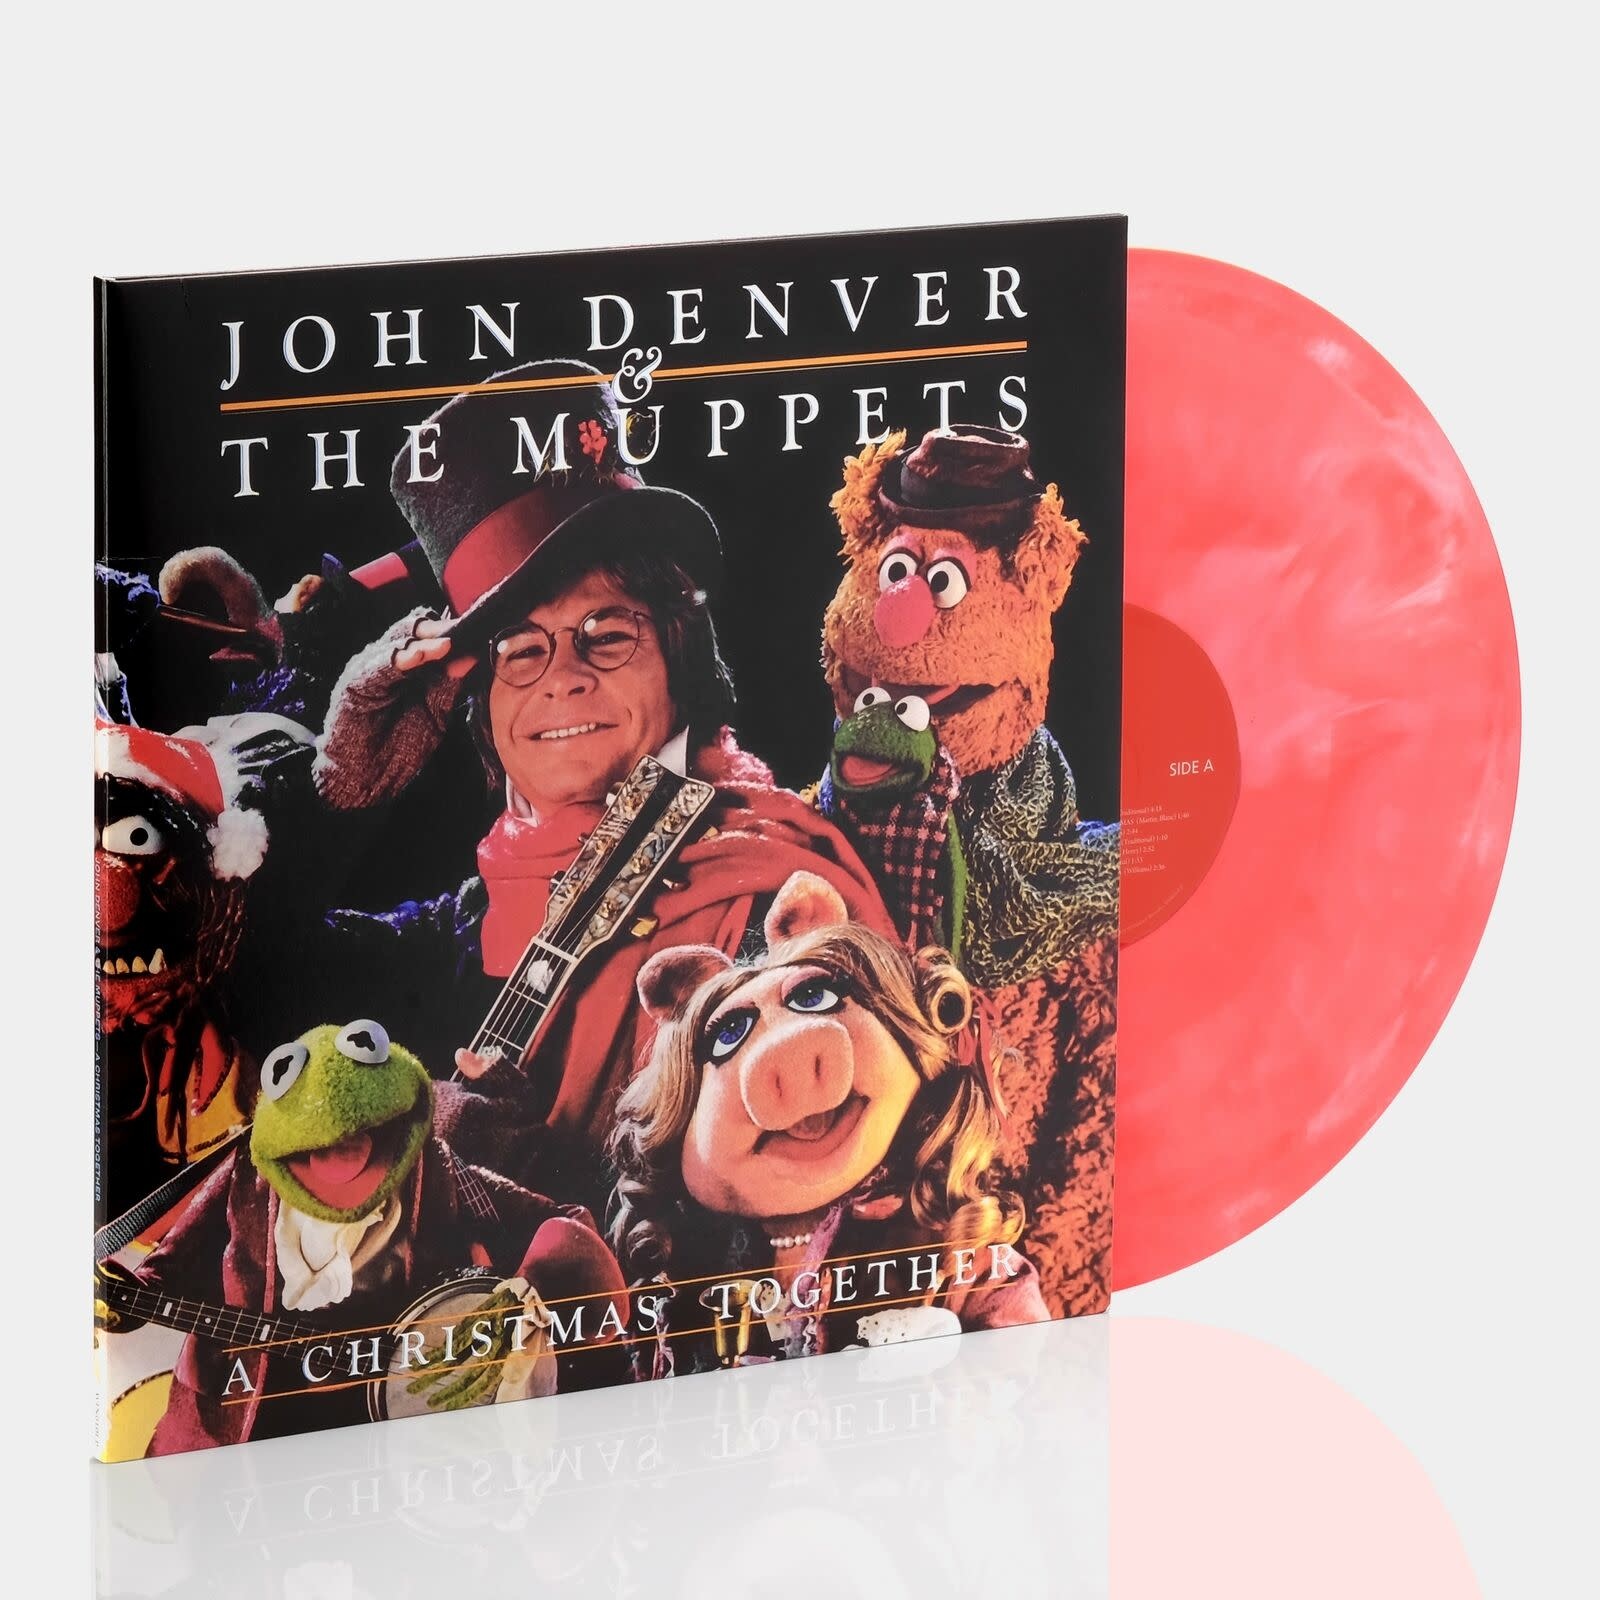 John Denver & The Muppets – A Christmas Together